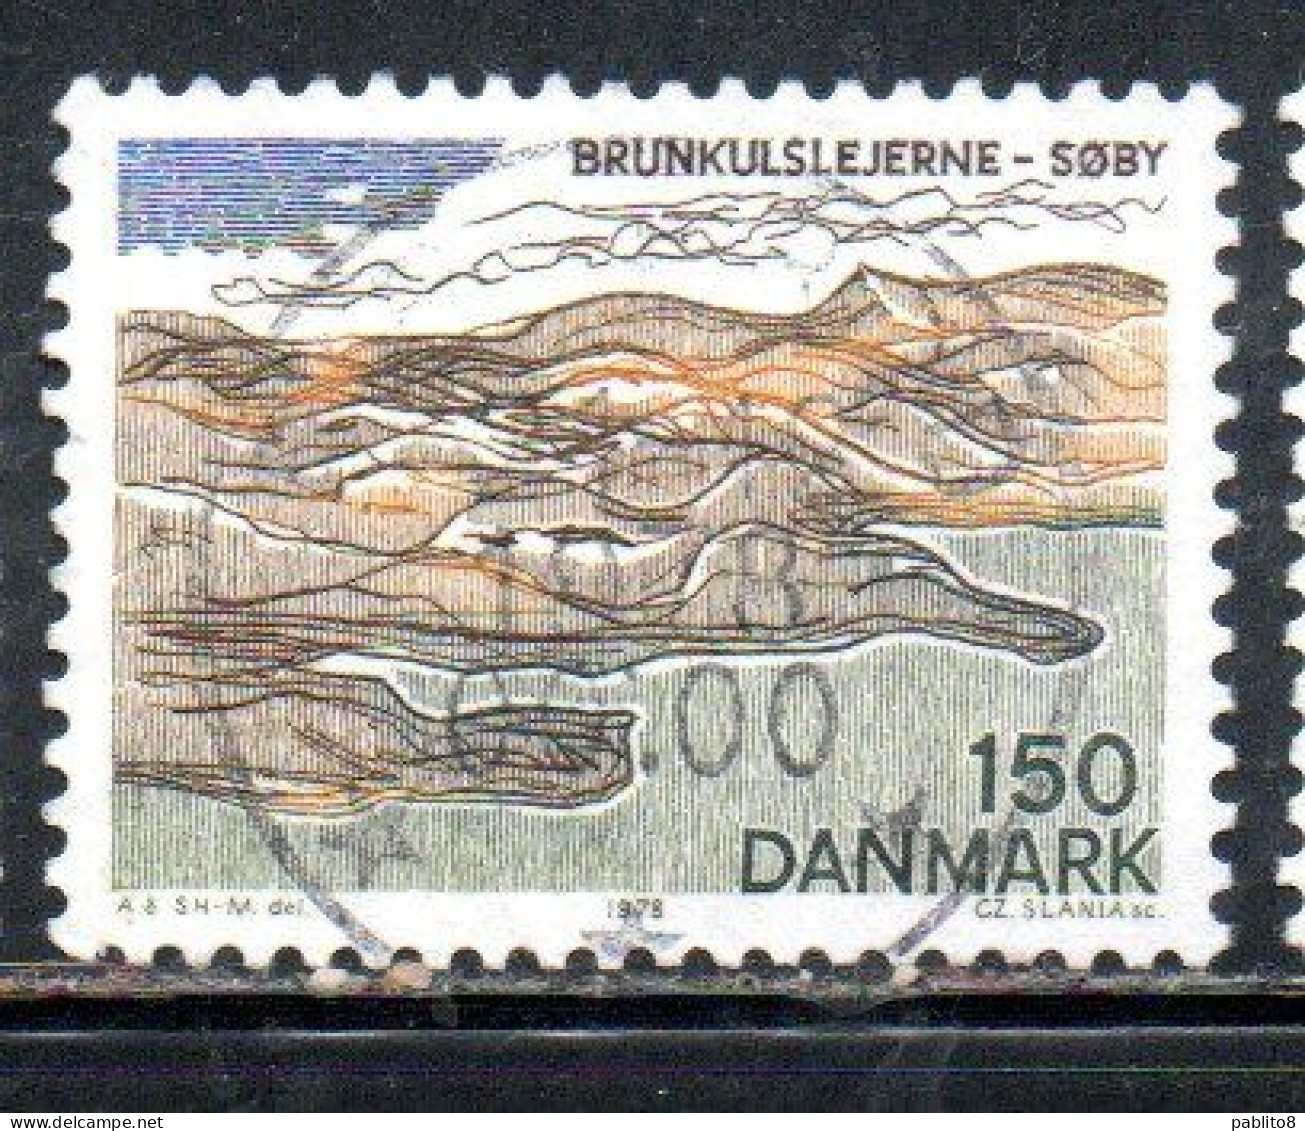 DANEMARK DANMARK DENMARK DANIMARCA 1978 LANDSCAPES CENTRAL JUTLAND LIGNITE FIELDS  SOBY 150o USED USATO OBLITERE' - Oblitérés